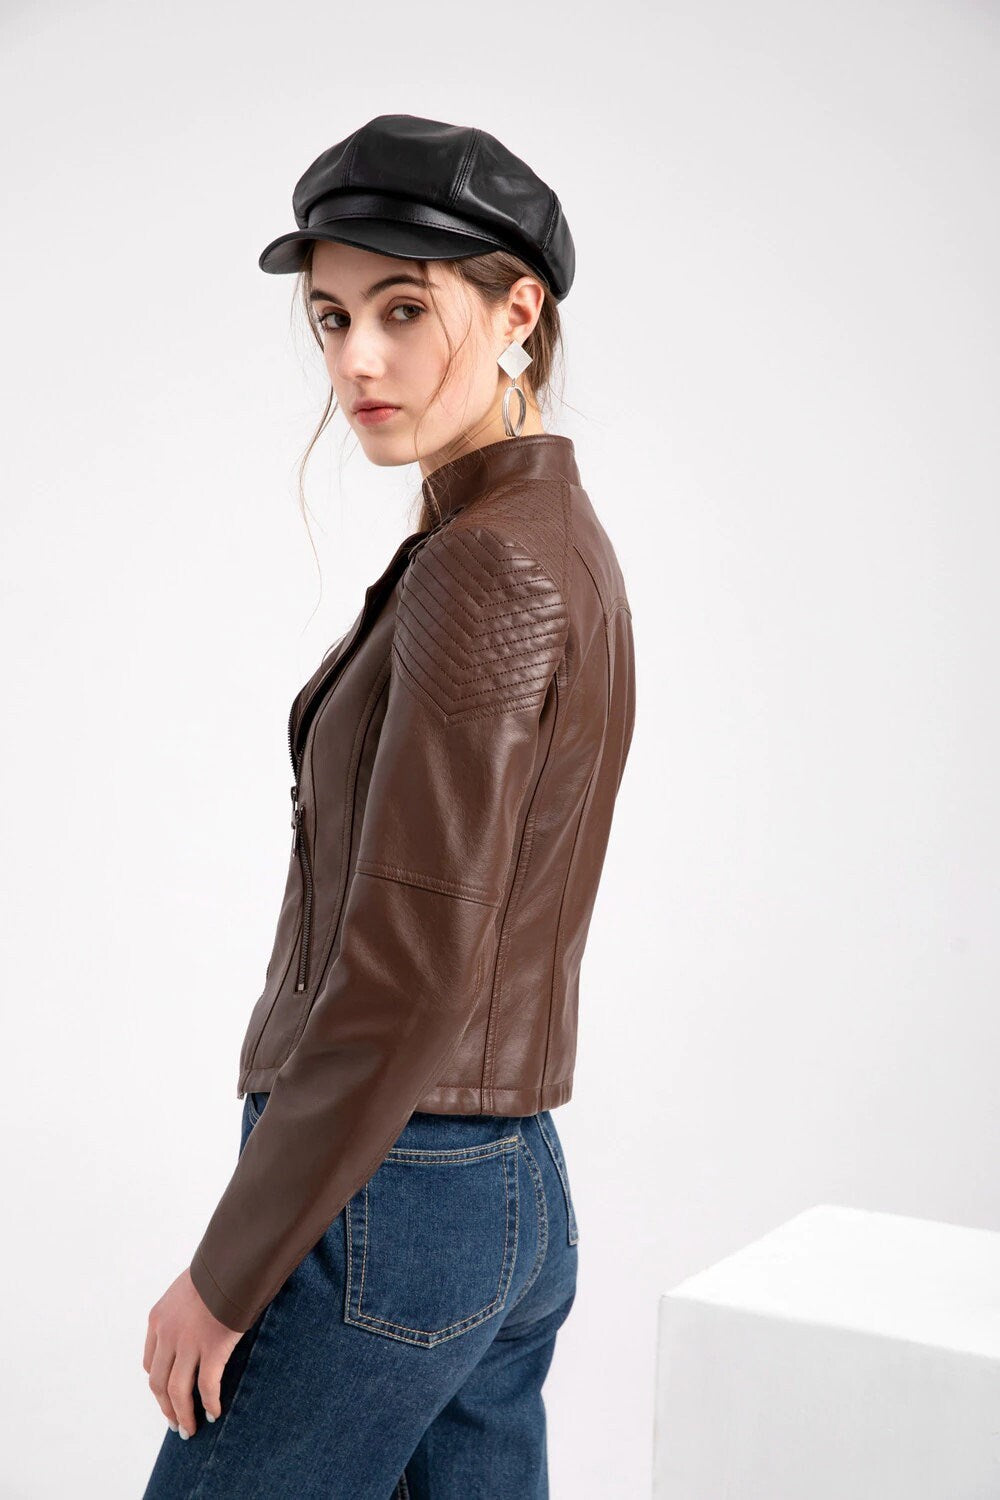 Slim Fit Brown Women Biker Leather Jacket